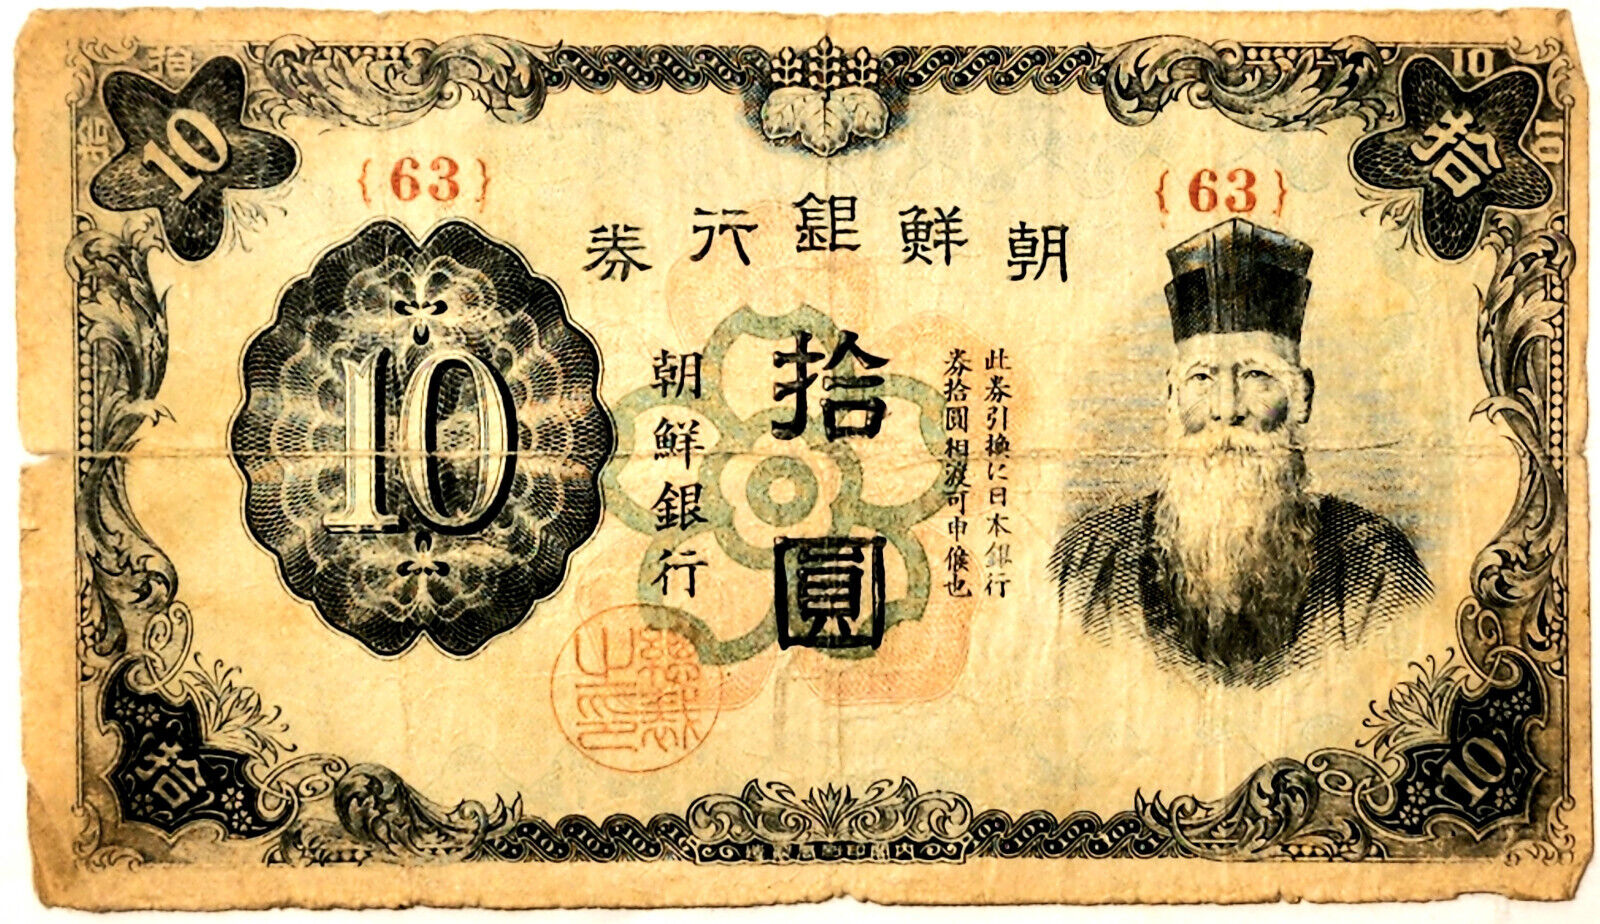 Korea  10  Yen  Nd. 1944  P 36  Block { 63 }  Circulated Banknote Mek